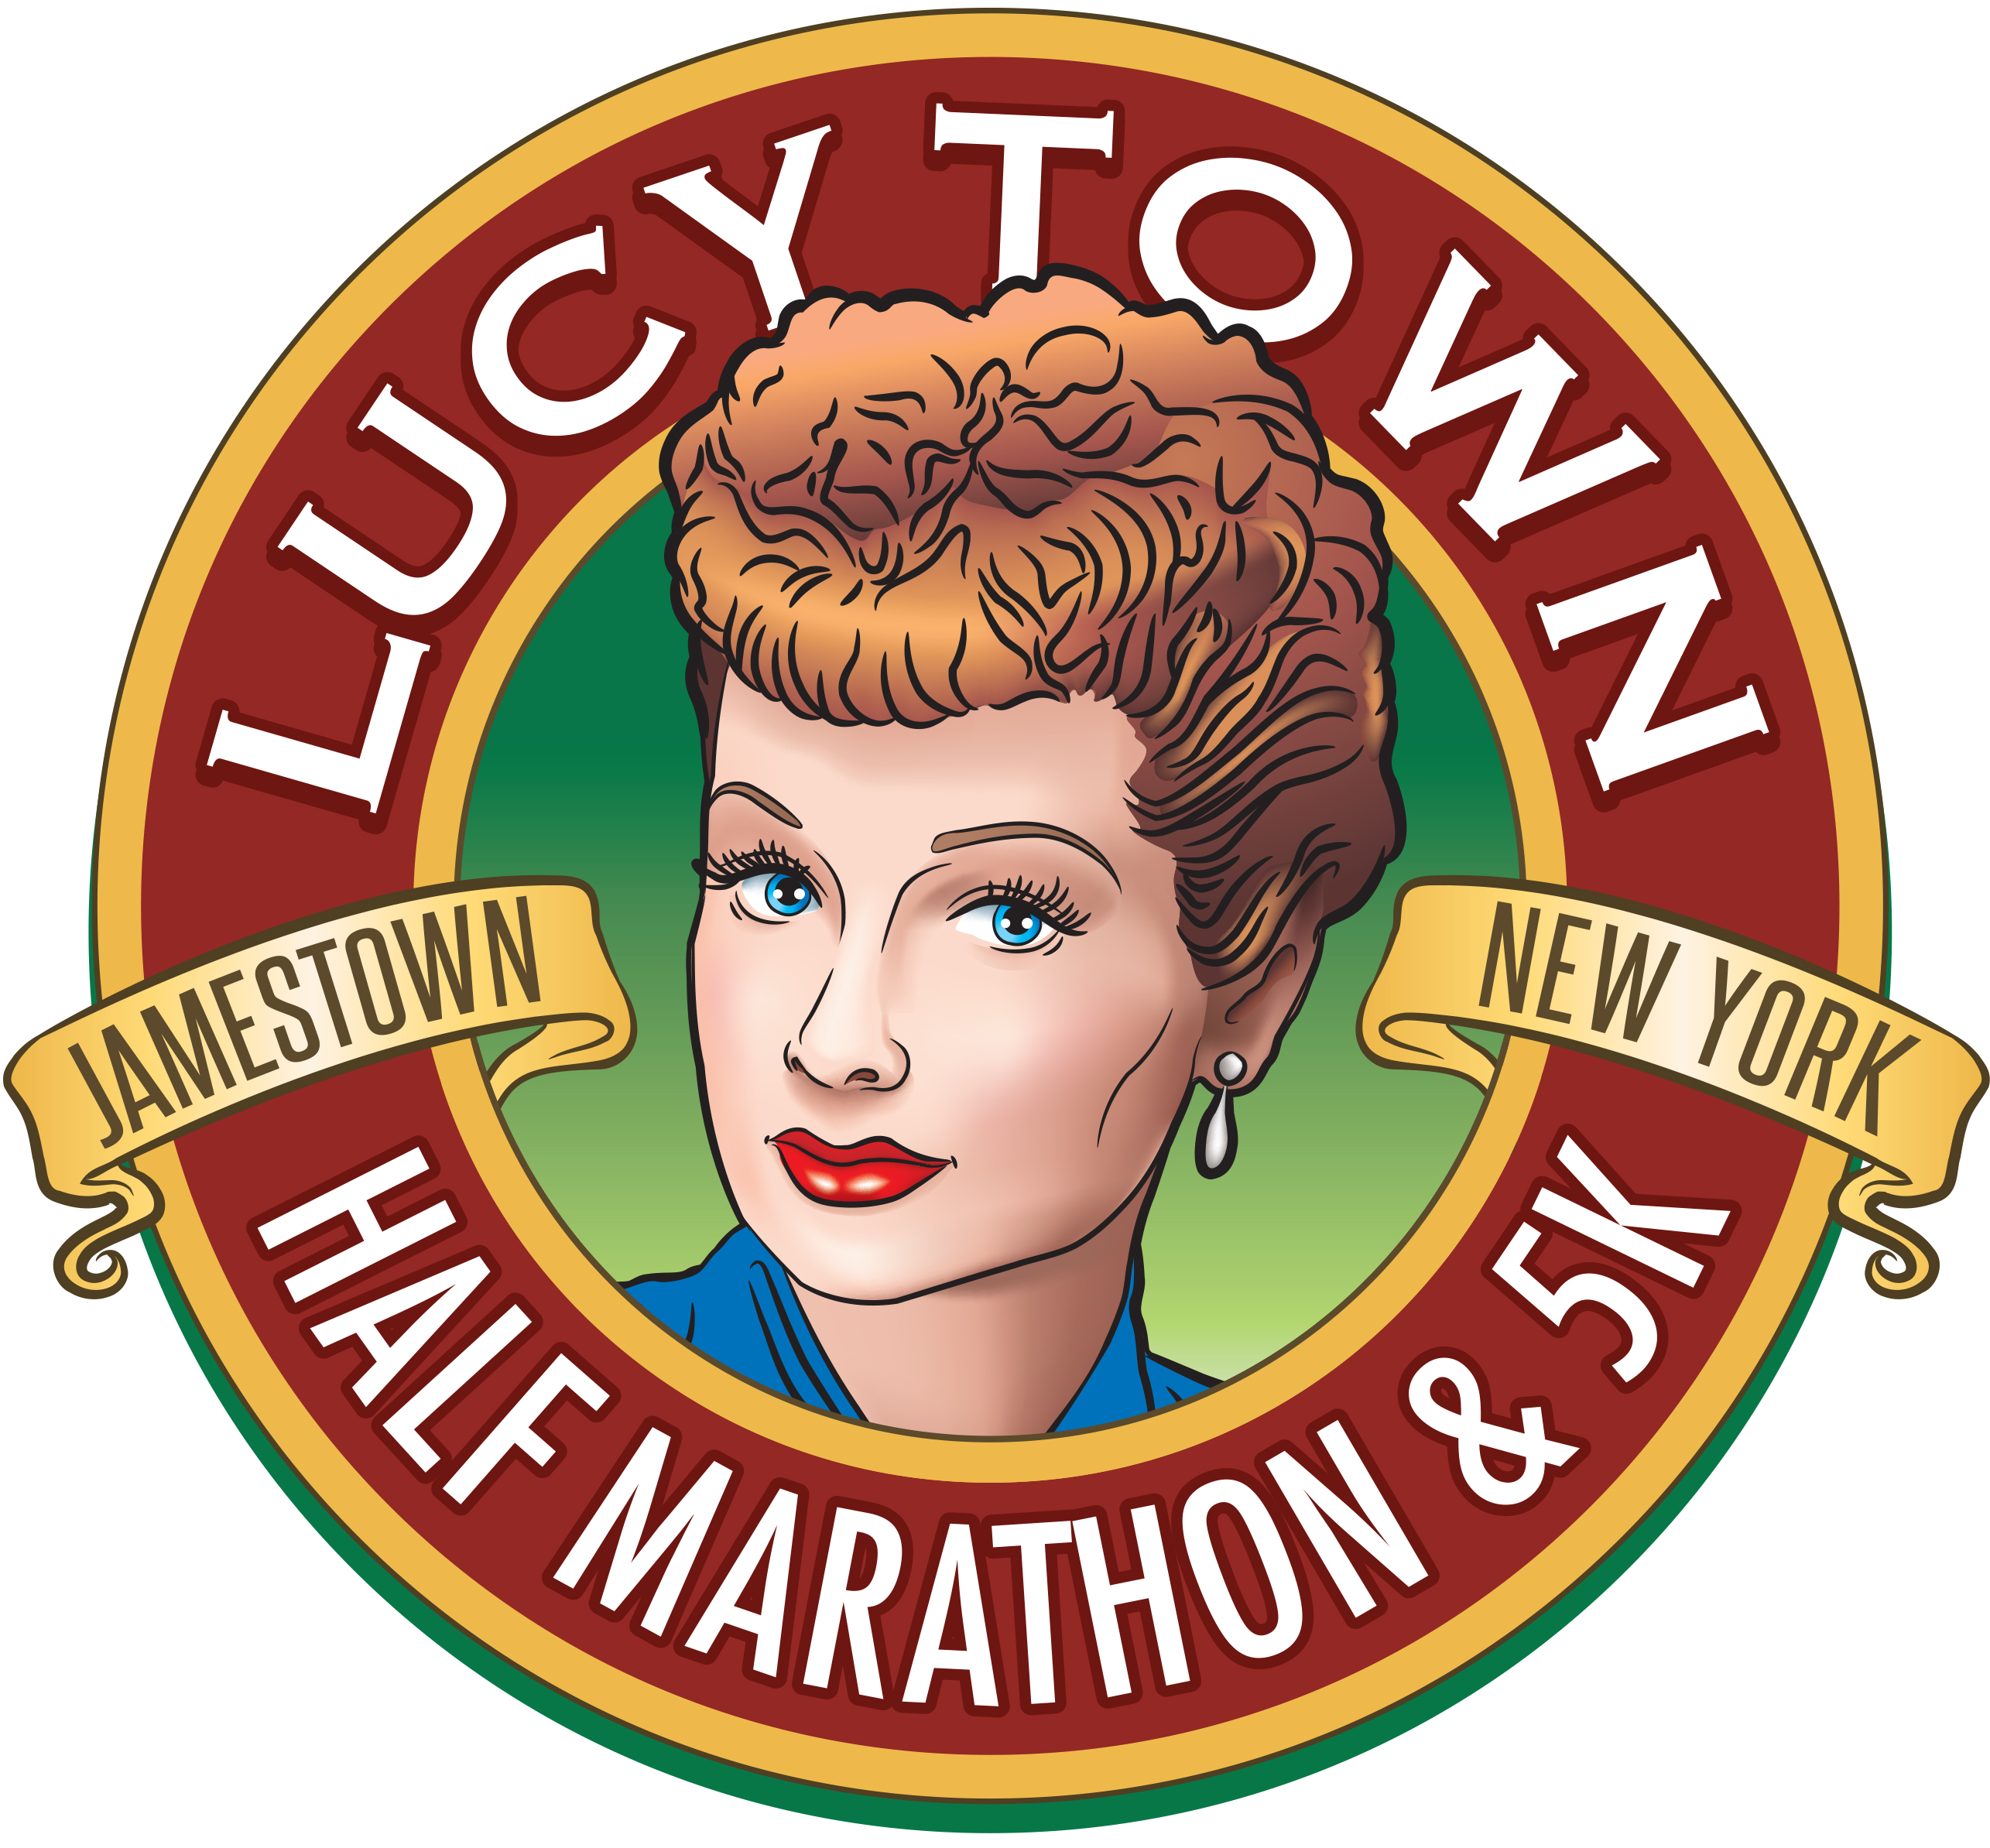 Lucy Town Half Marathon and 5k Race